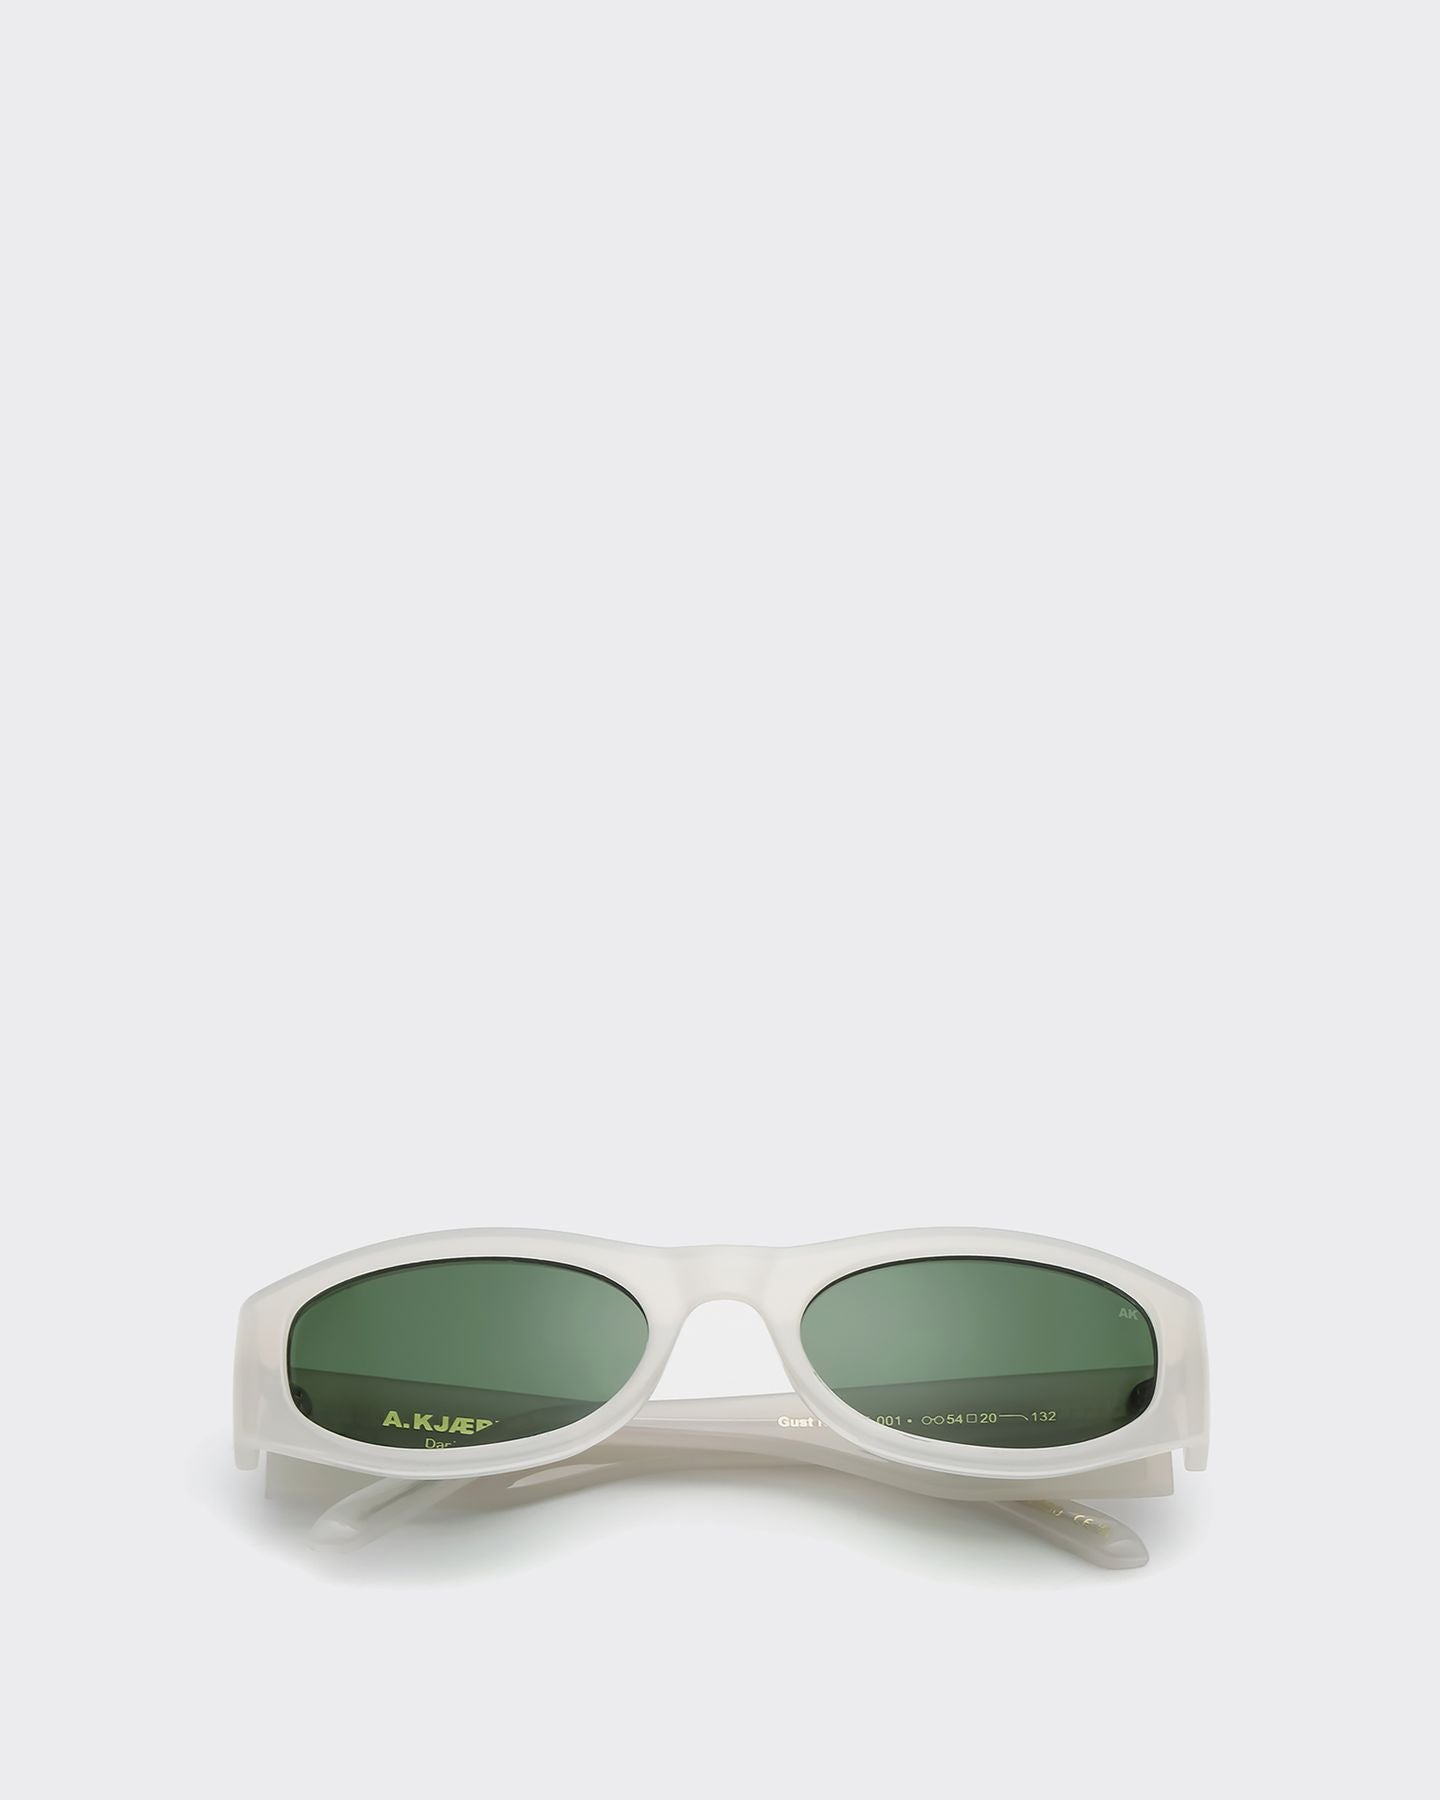 Gust Cream Bone Sunglasses